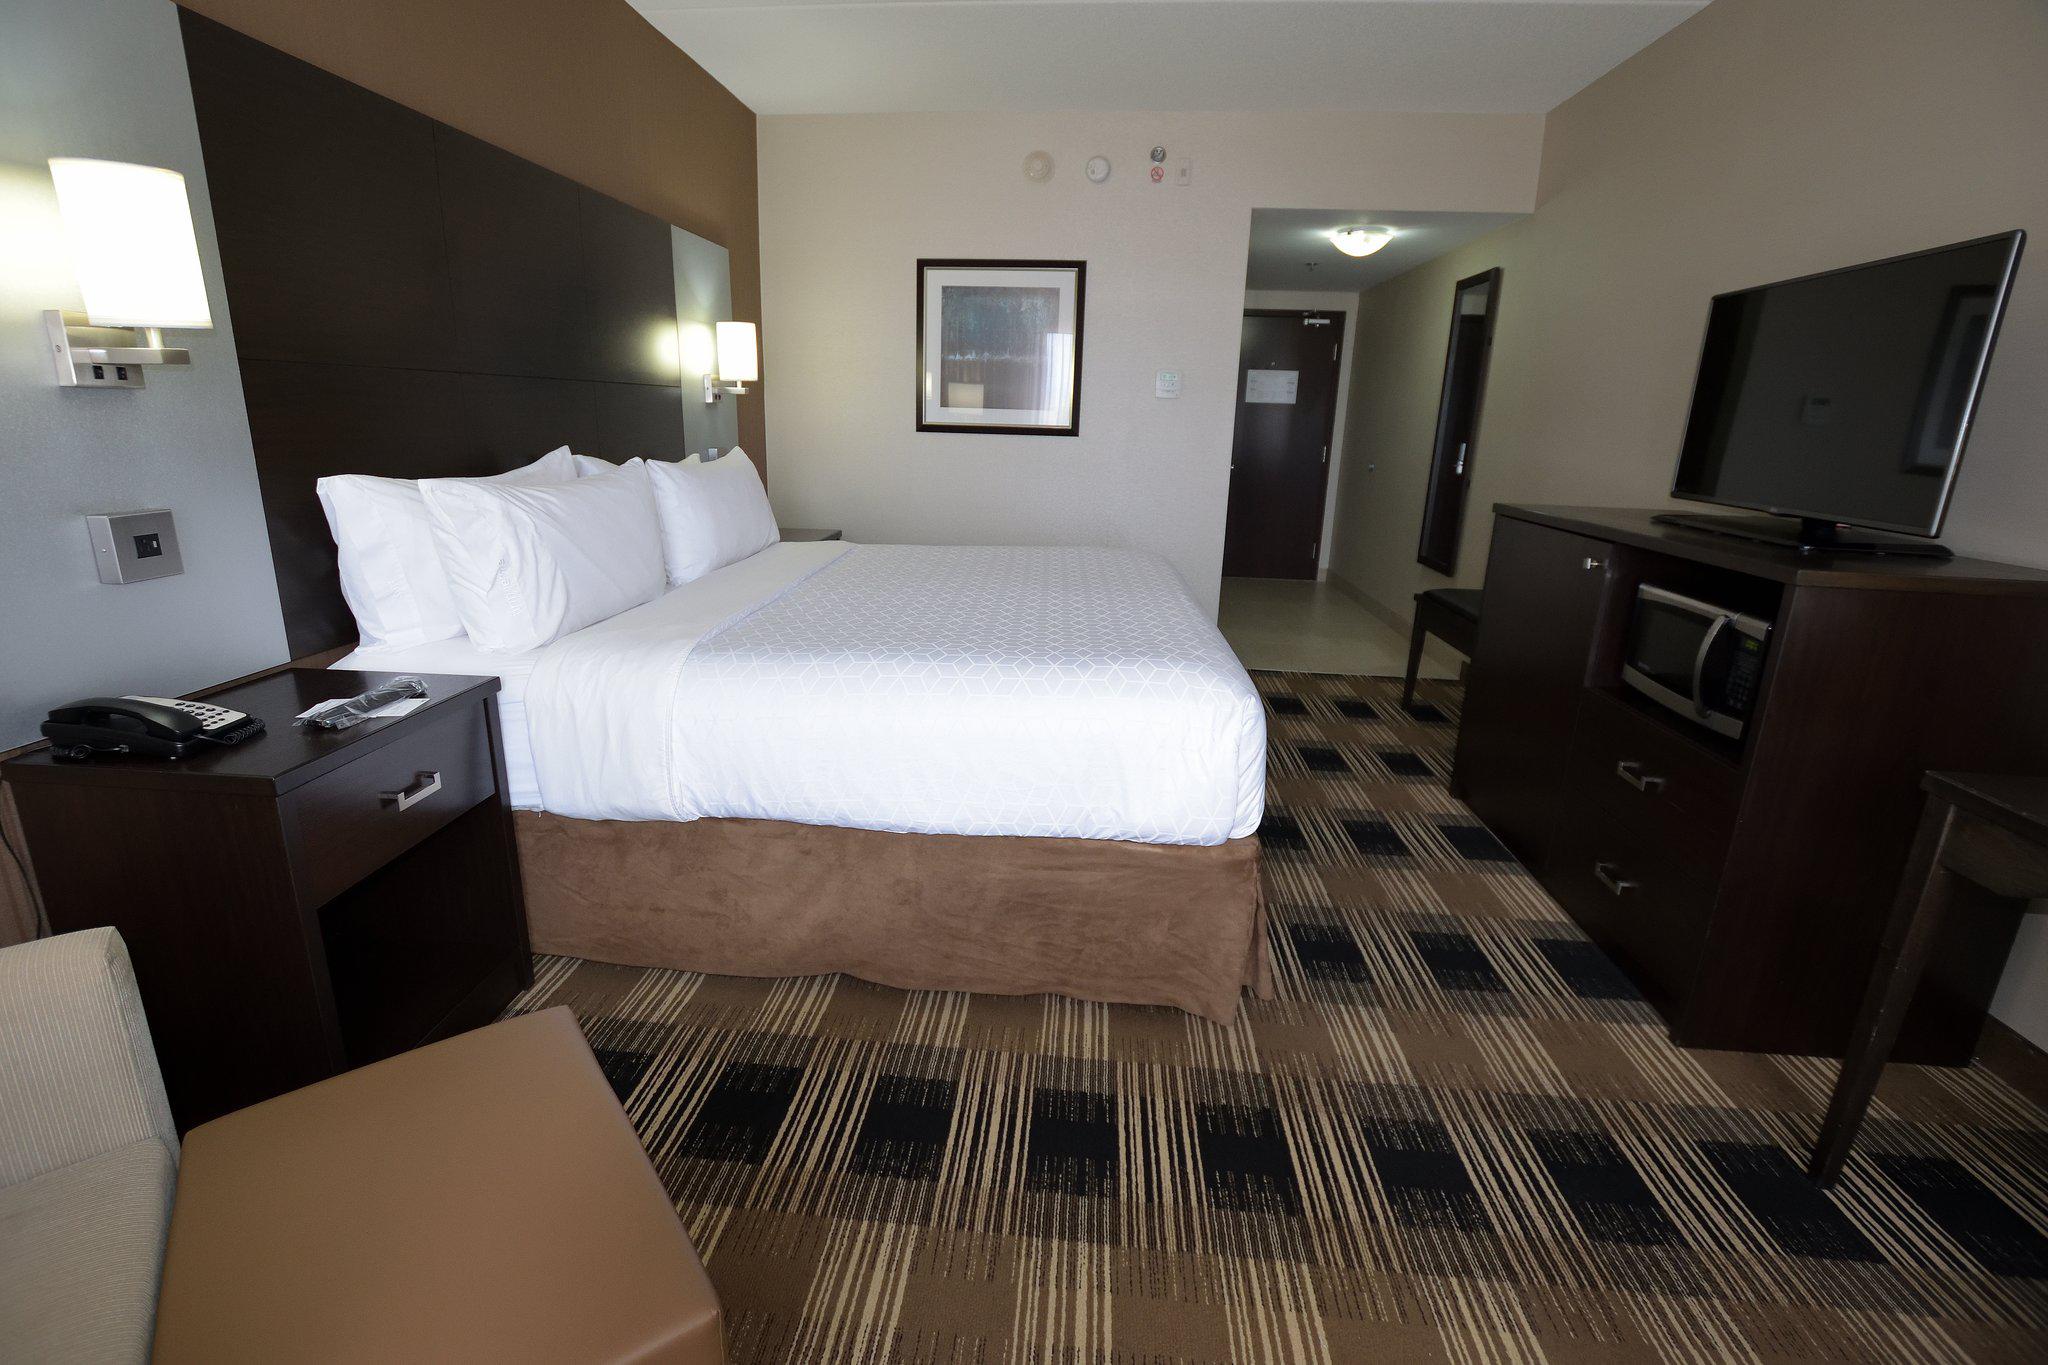 Holiday Inn Express & Suites Ottawa East - Orleans, an IHG Hotel Ottawa (613)824-8444